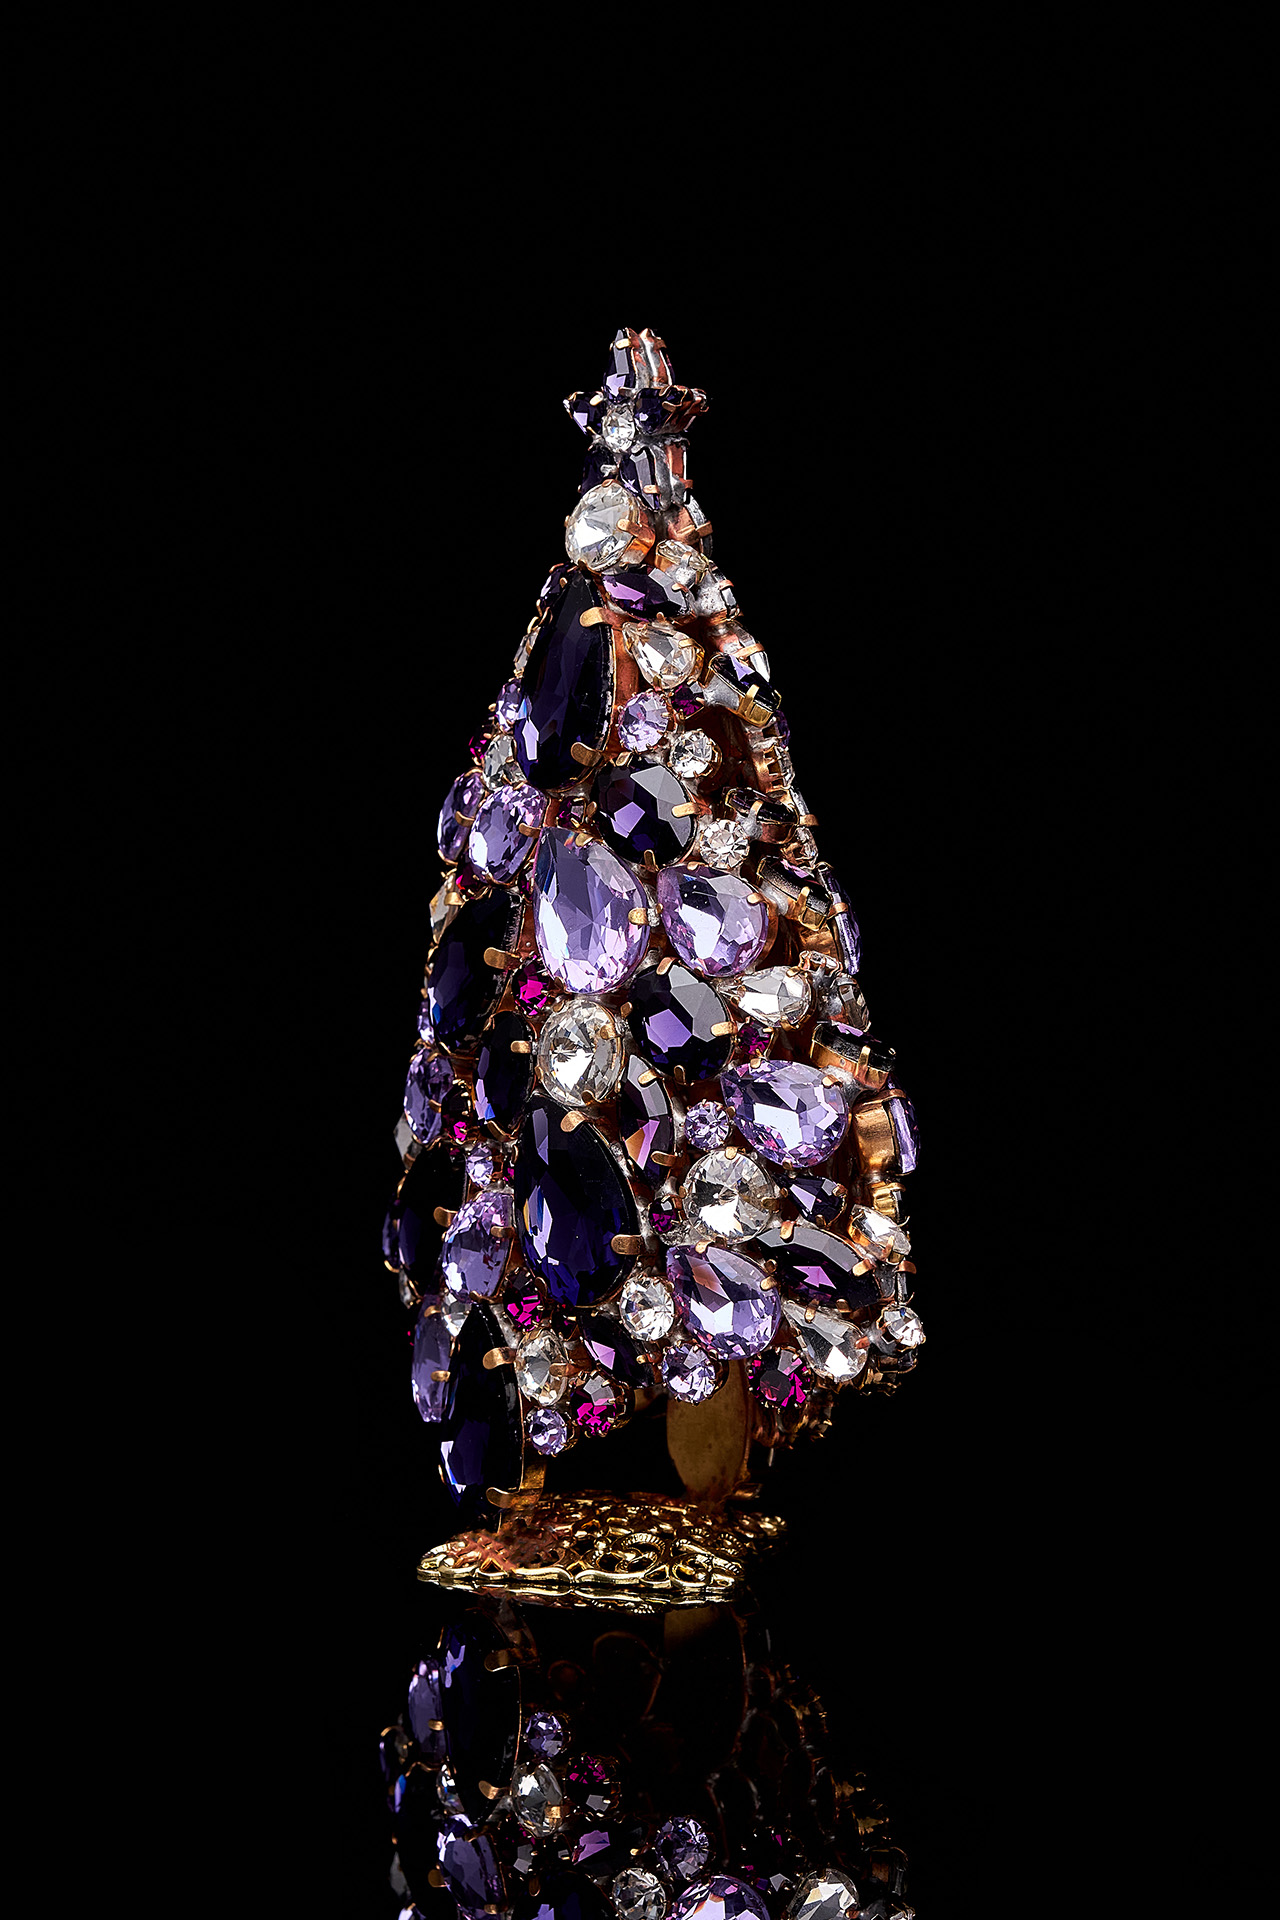 Czech handmade magical 3D Christmas tree from purple rhinestones